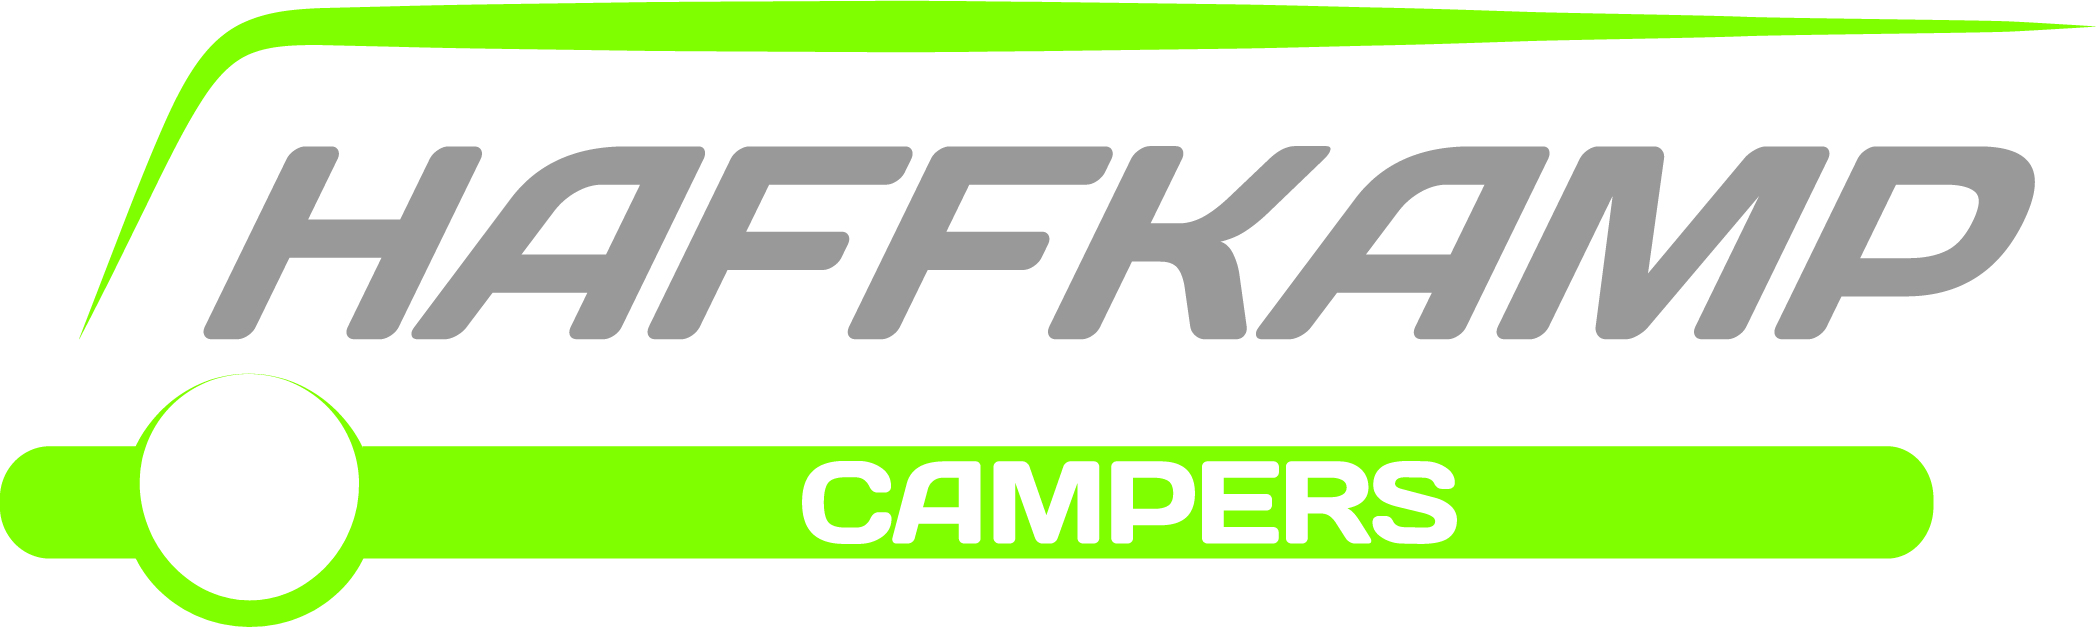 Haffkamp campers BV